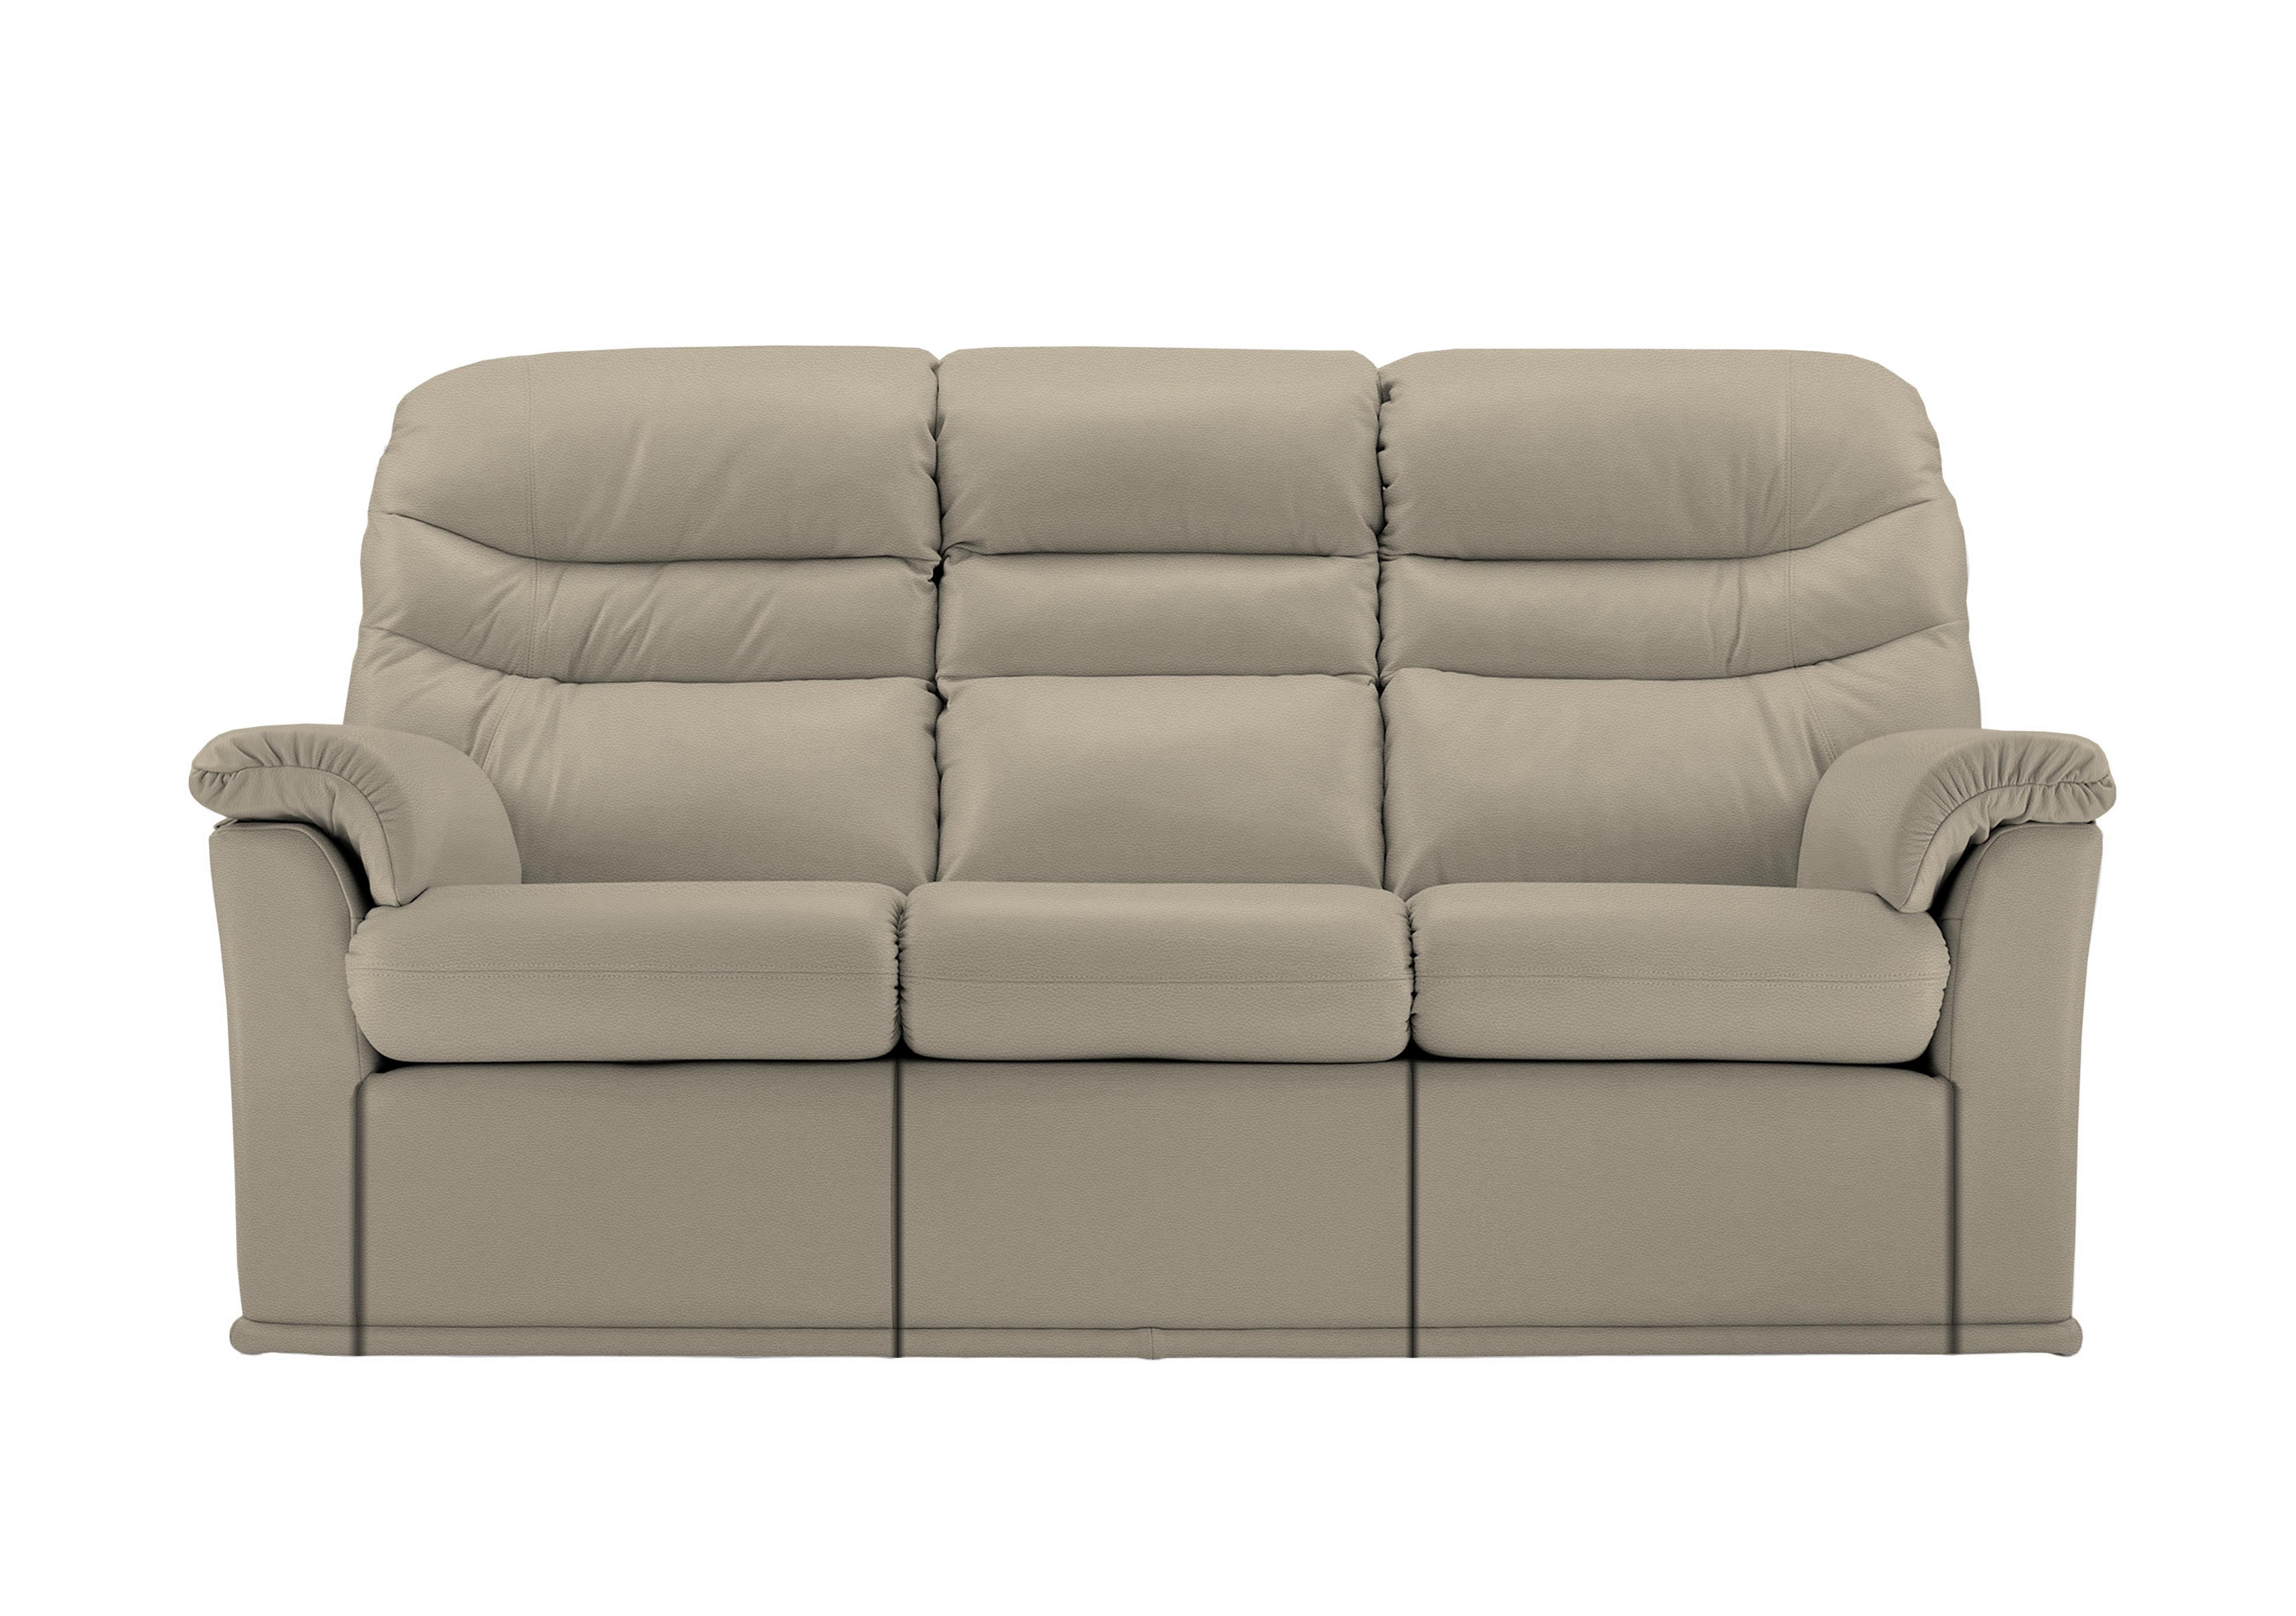 Malvern 3 Seater Leather Sofa in H001 Oxford Mushroom on Furniture Village